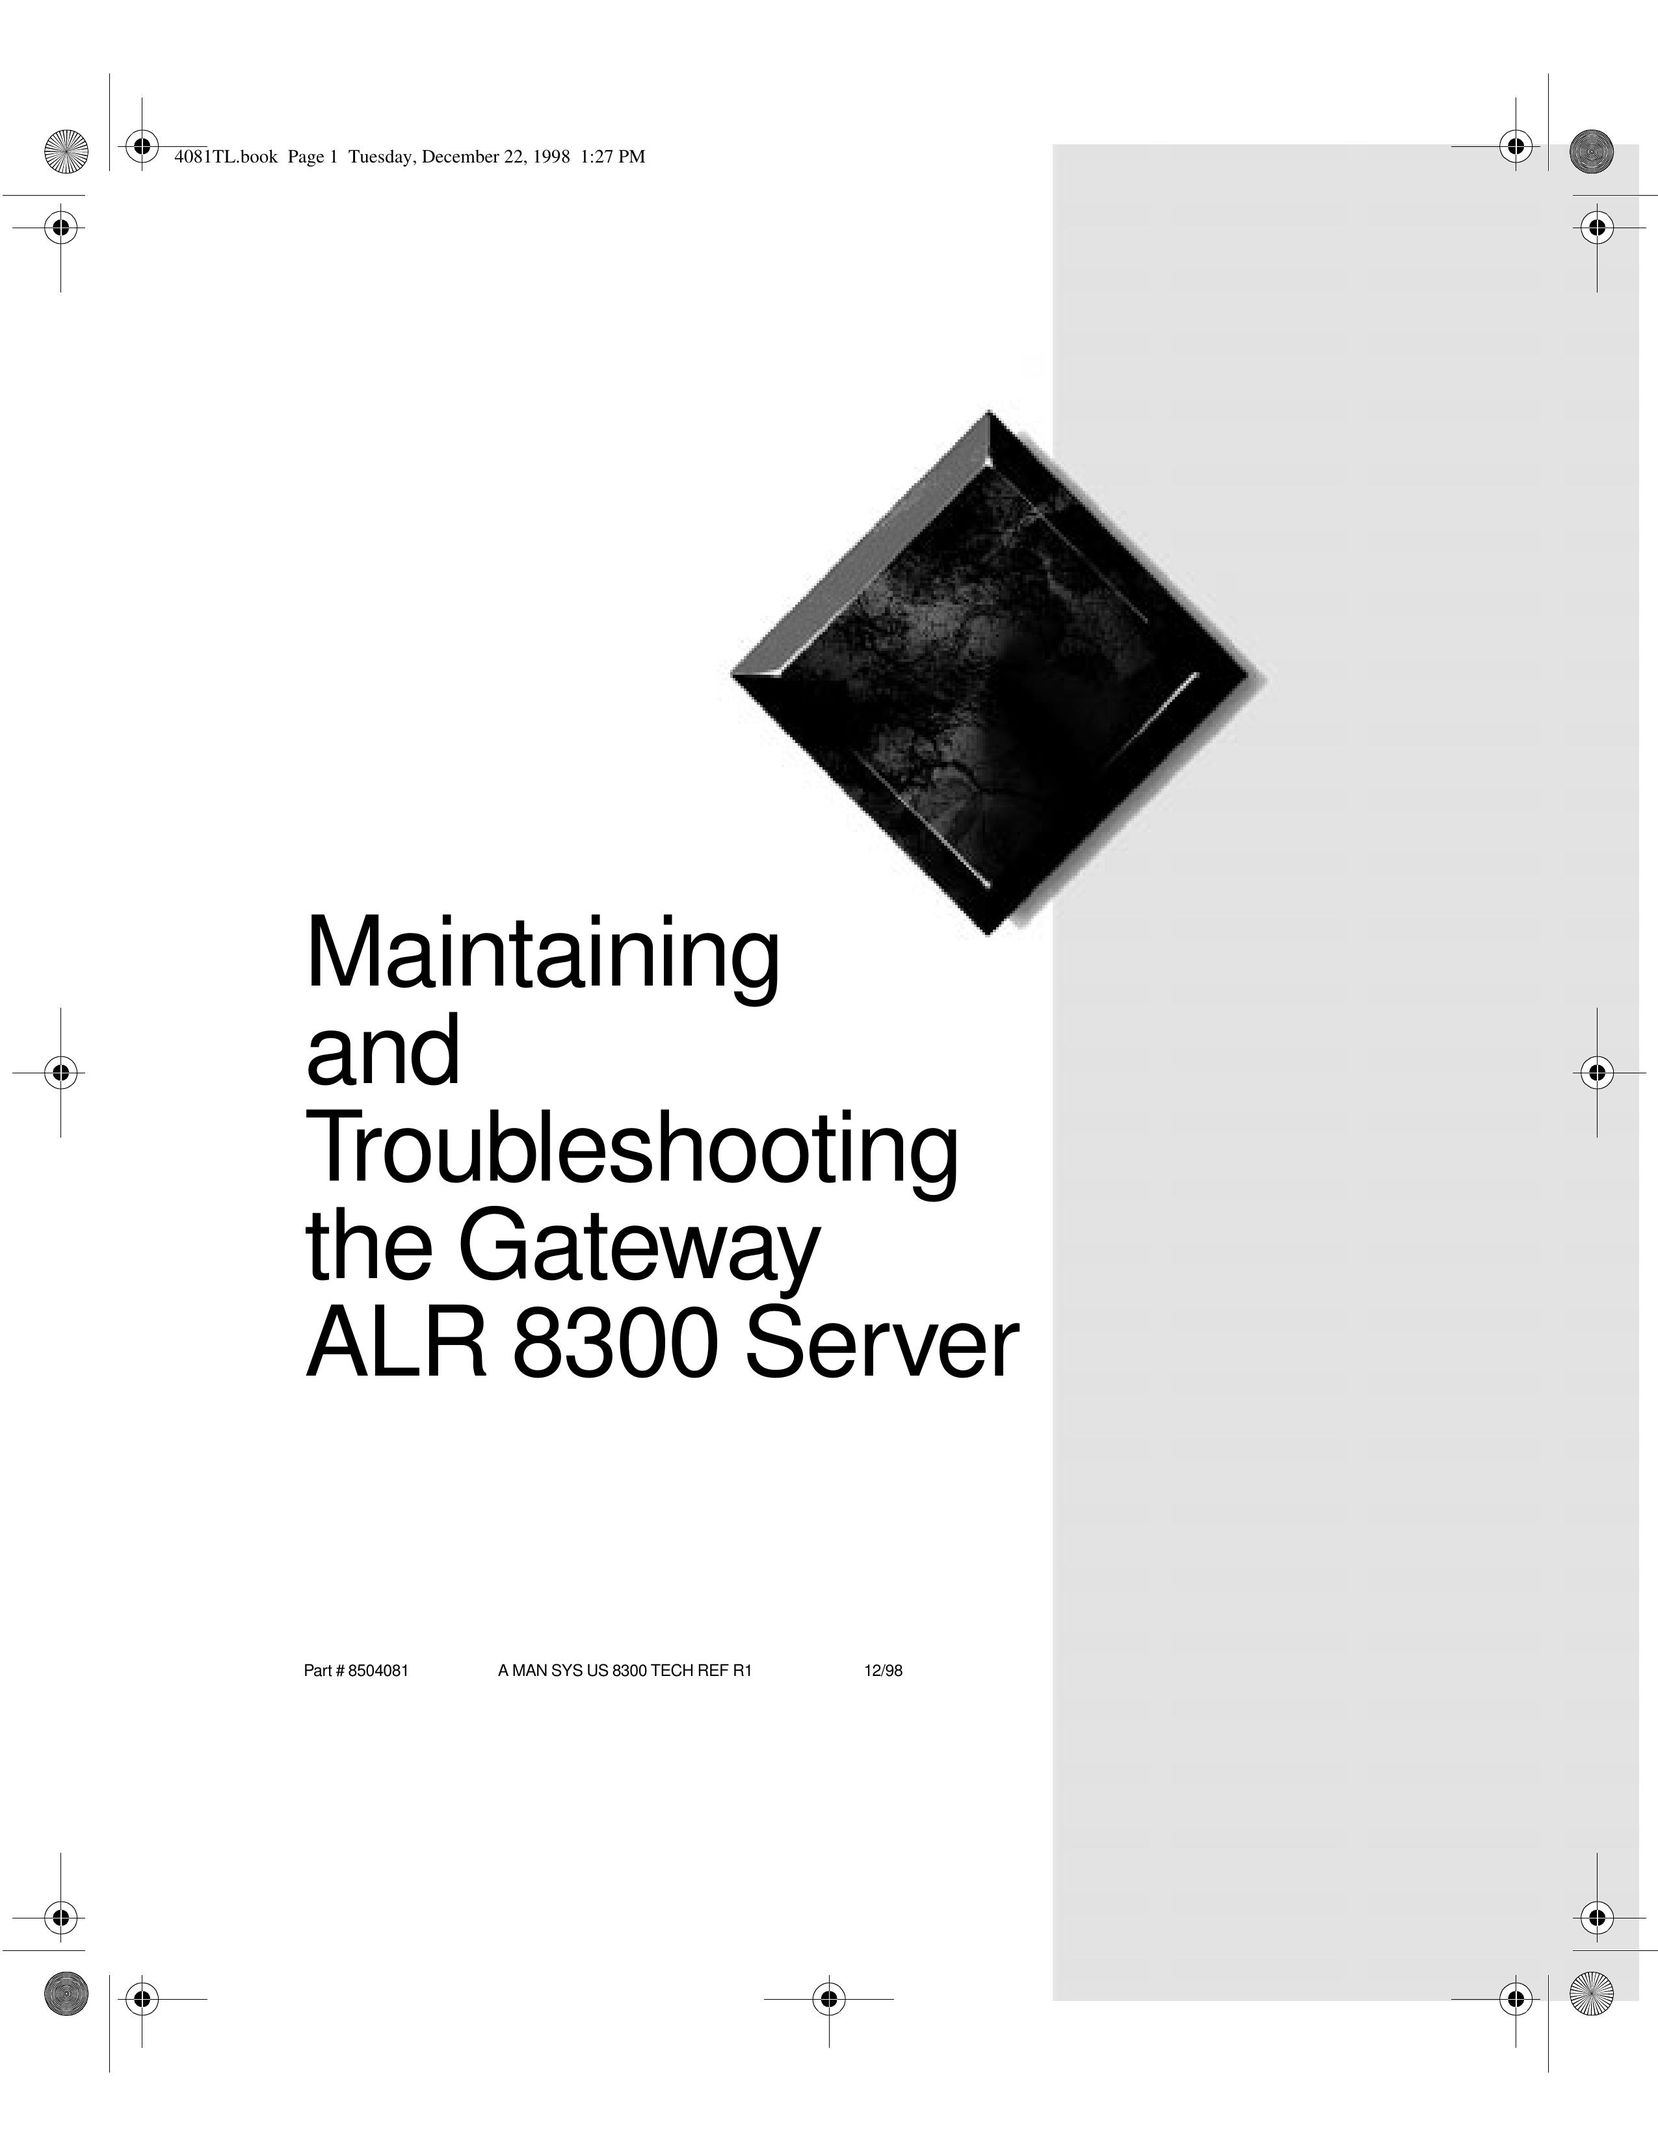 Gateway ALR 8300 Server User Manual